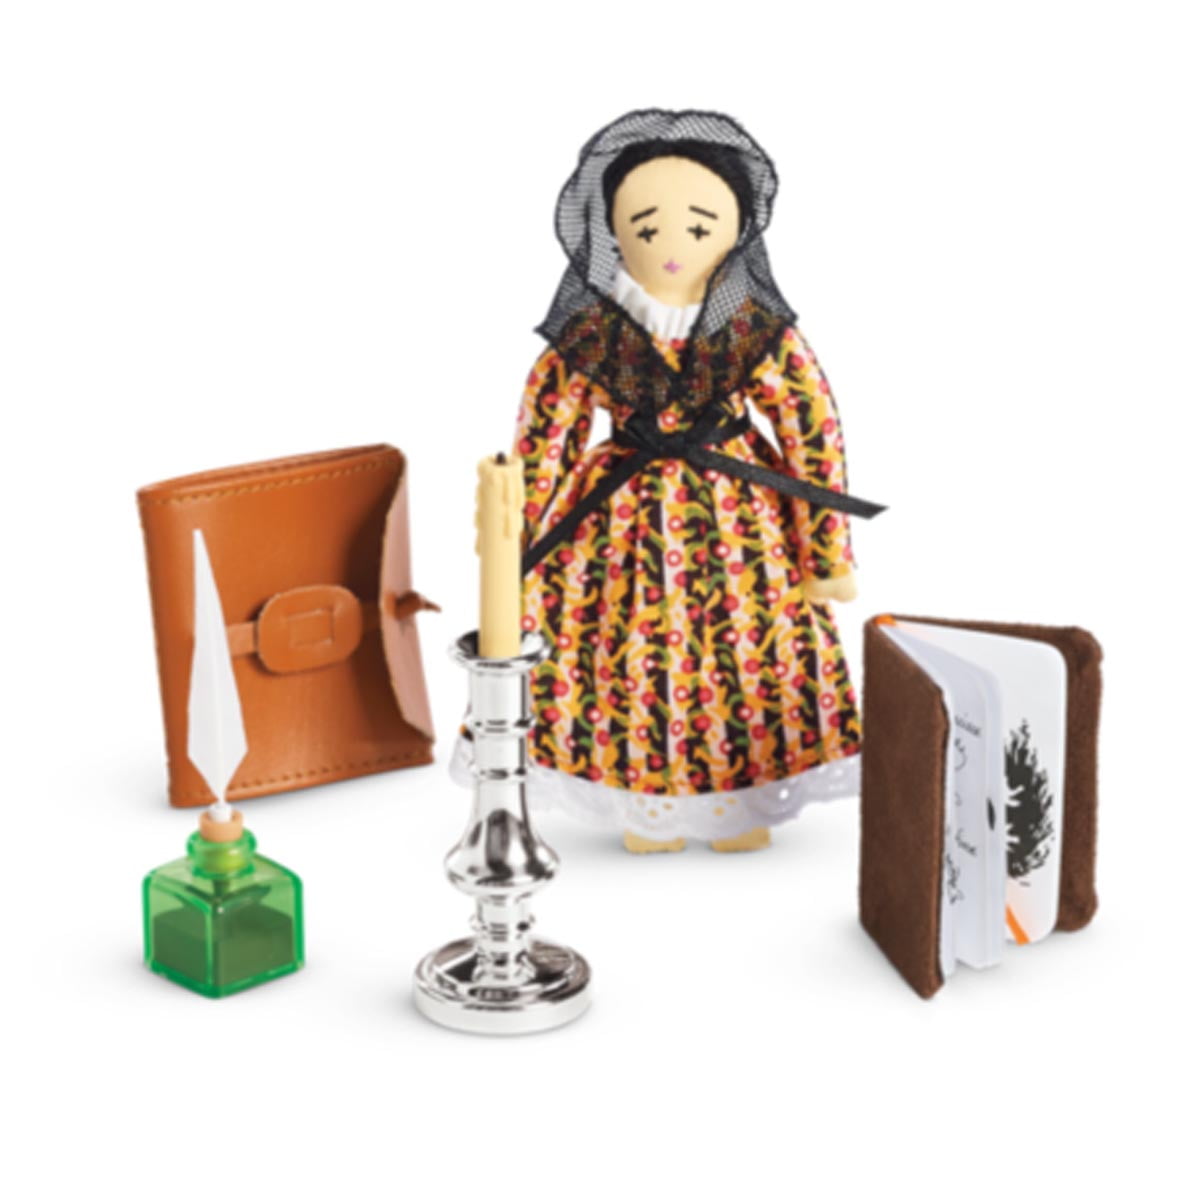 MINI Pot Kitchen Maryellen Accessories Fit For 18" American Girl dolls Toys